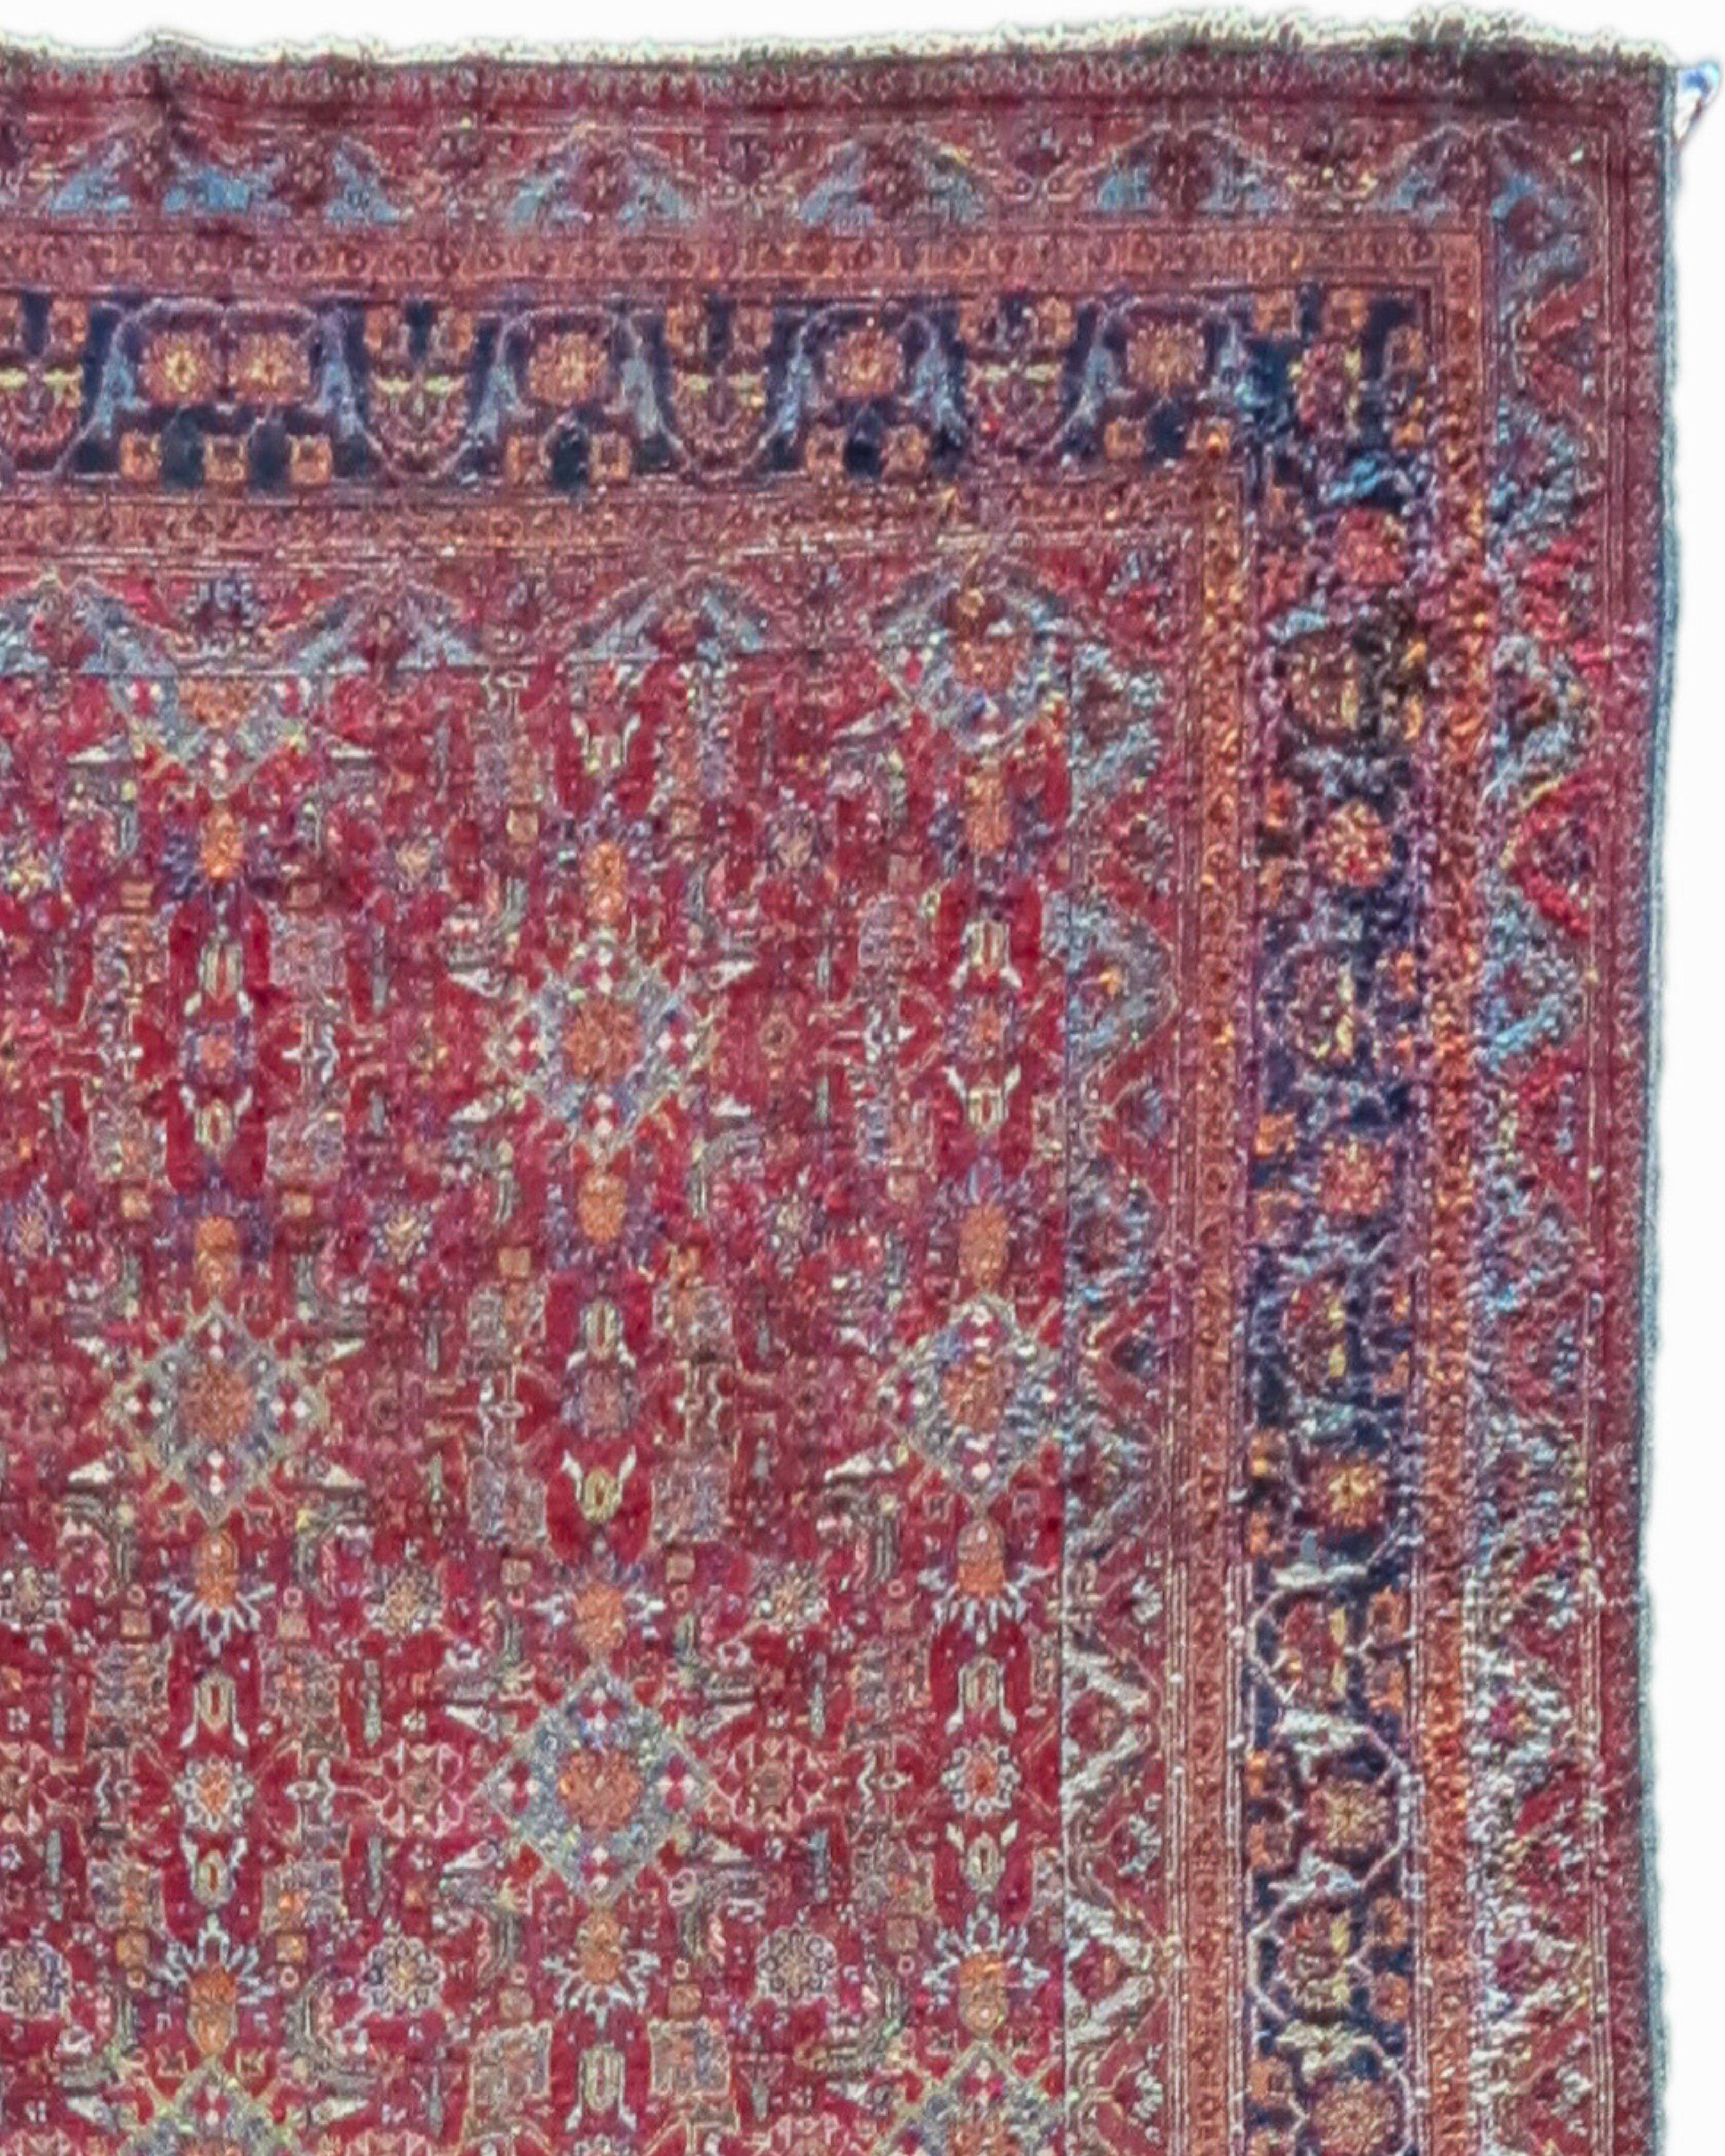 Grand tapis persan Khorassan ancien, fin du 19e siècle

Informations supplémentaires :
Dimensions : 7'0